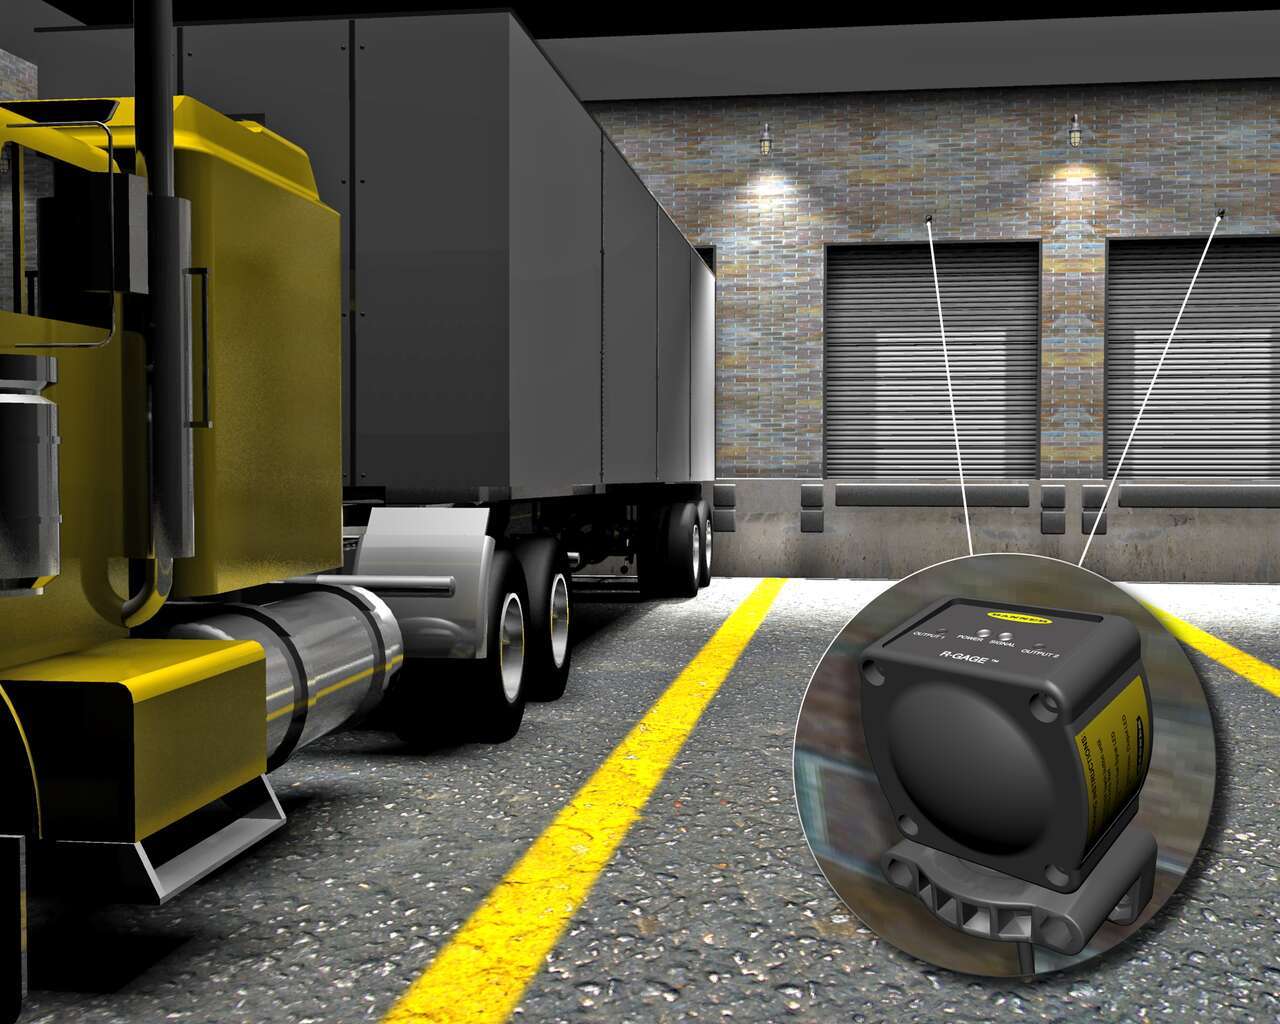 Radar sensor detects large trucks at a loading dock